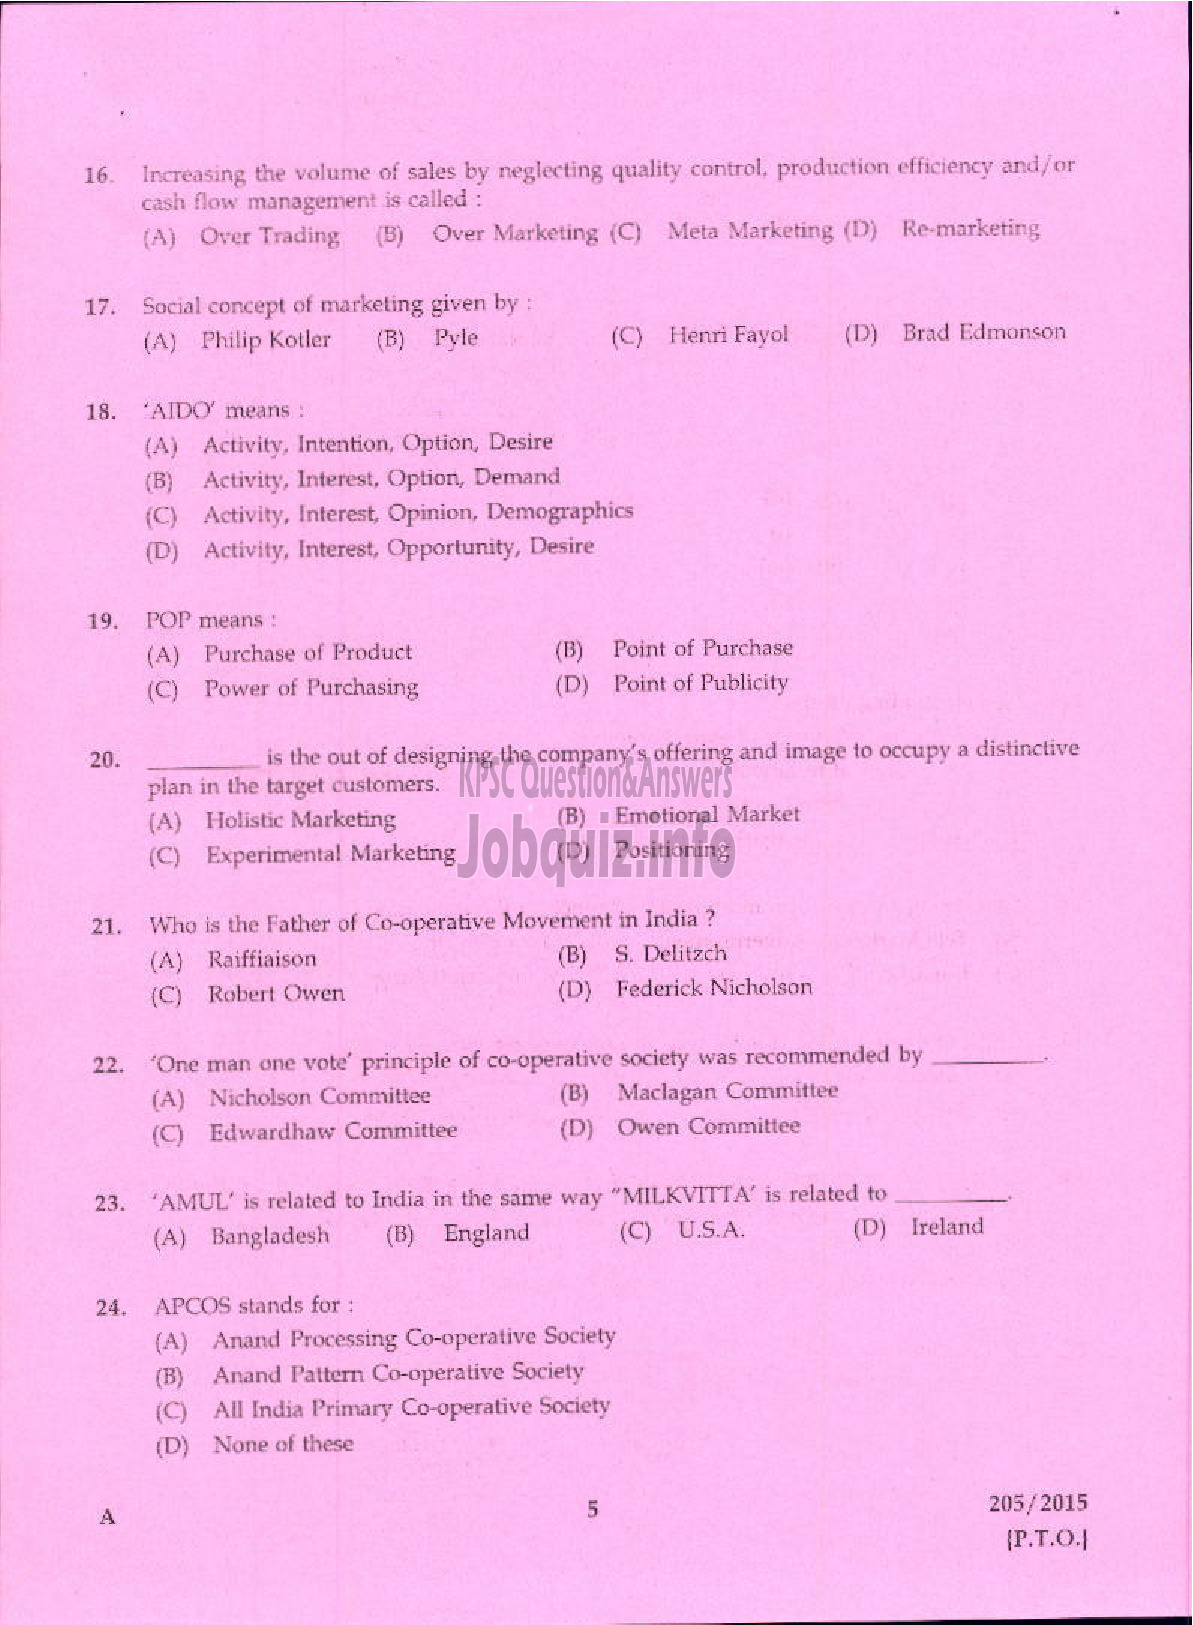 Kerala PSC Question Paper - MARKETING ORGANISER PART I AND PART II KCMMF LTD-3